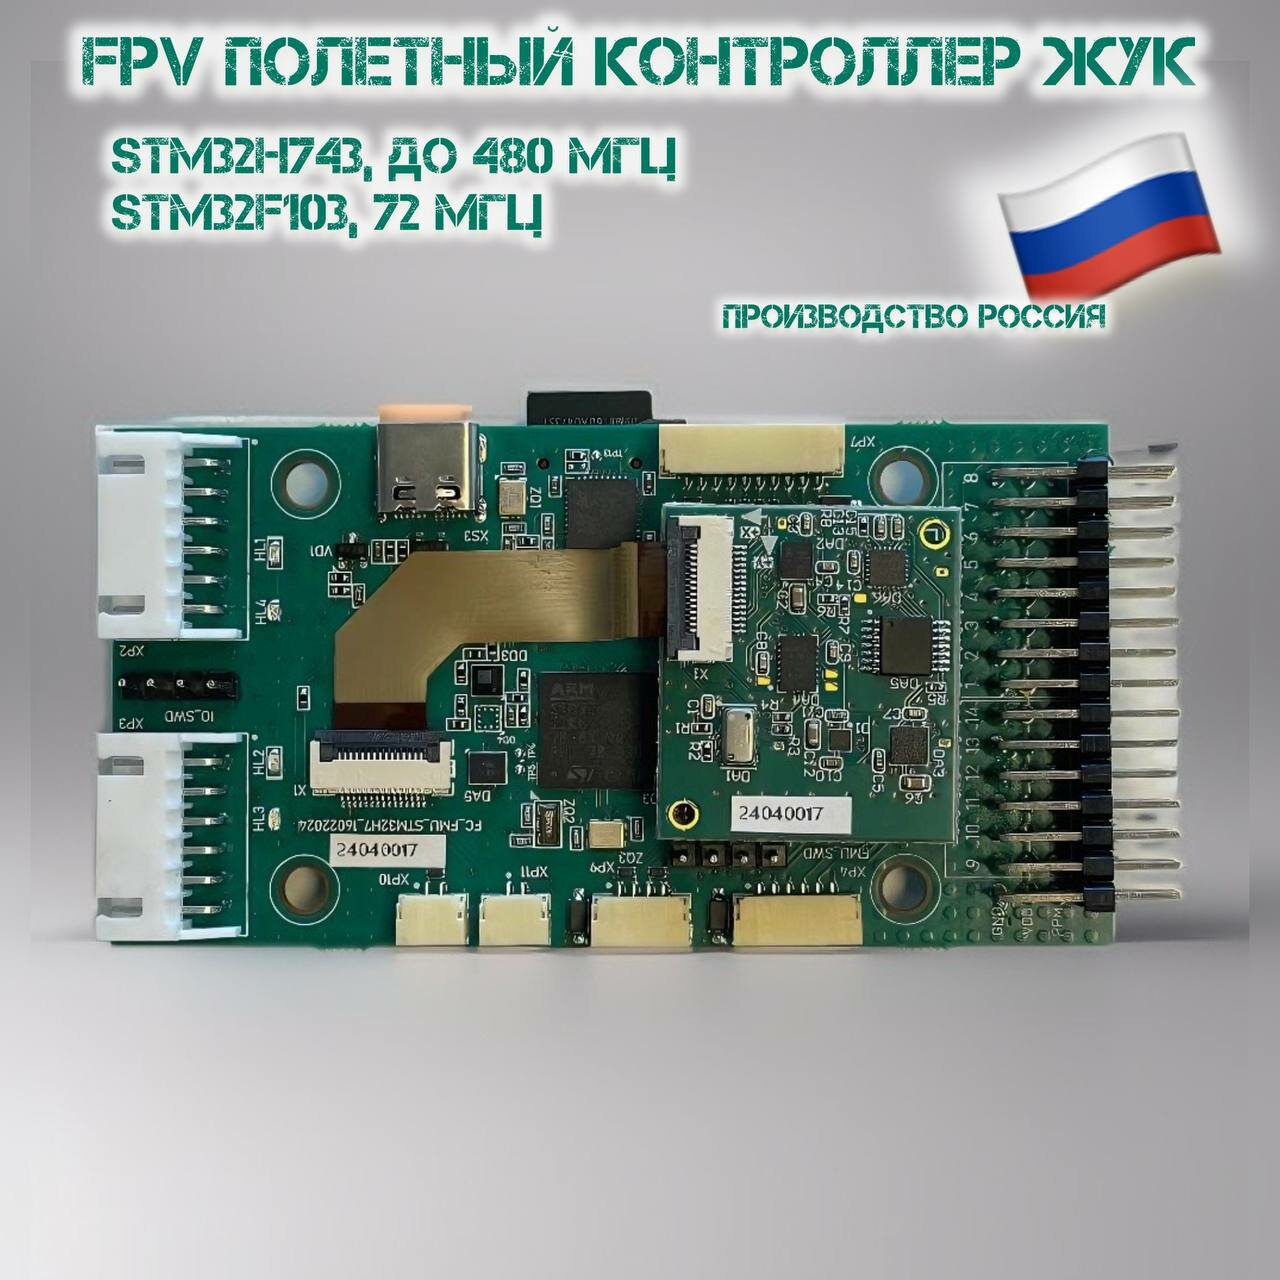 Полетный контроллер FPV для коптера